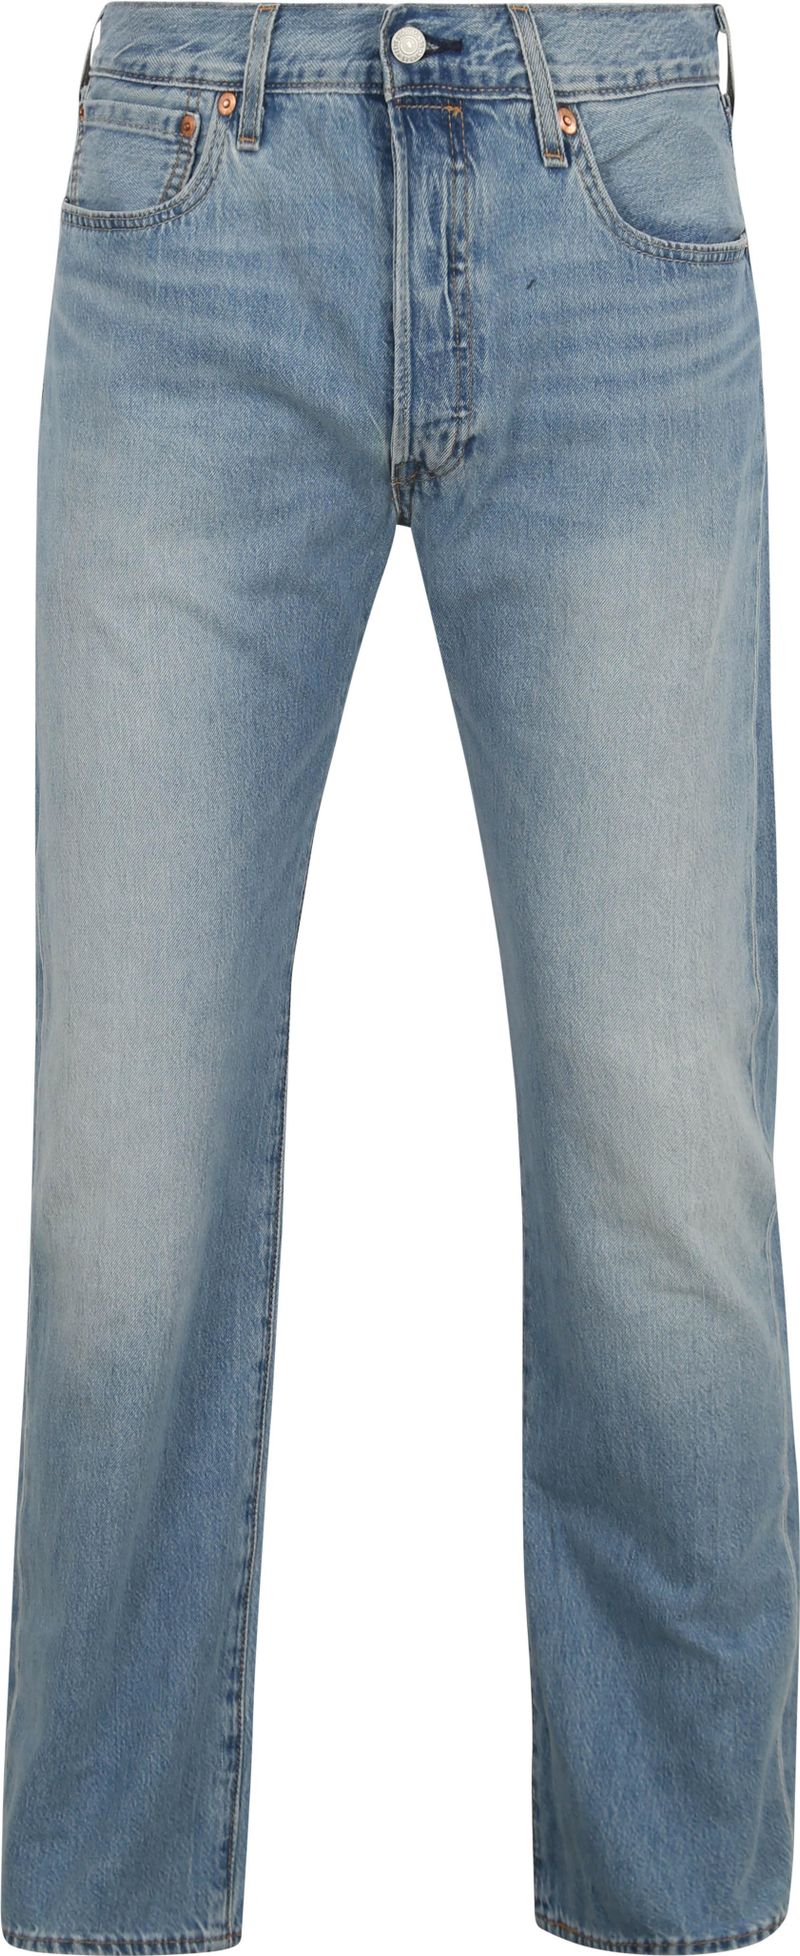 Levi's Straight Jeans Levis 501 ORIGINAL Lightweight